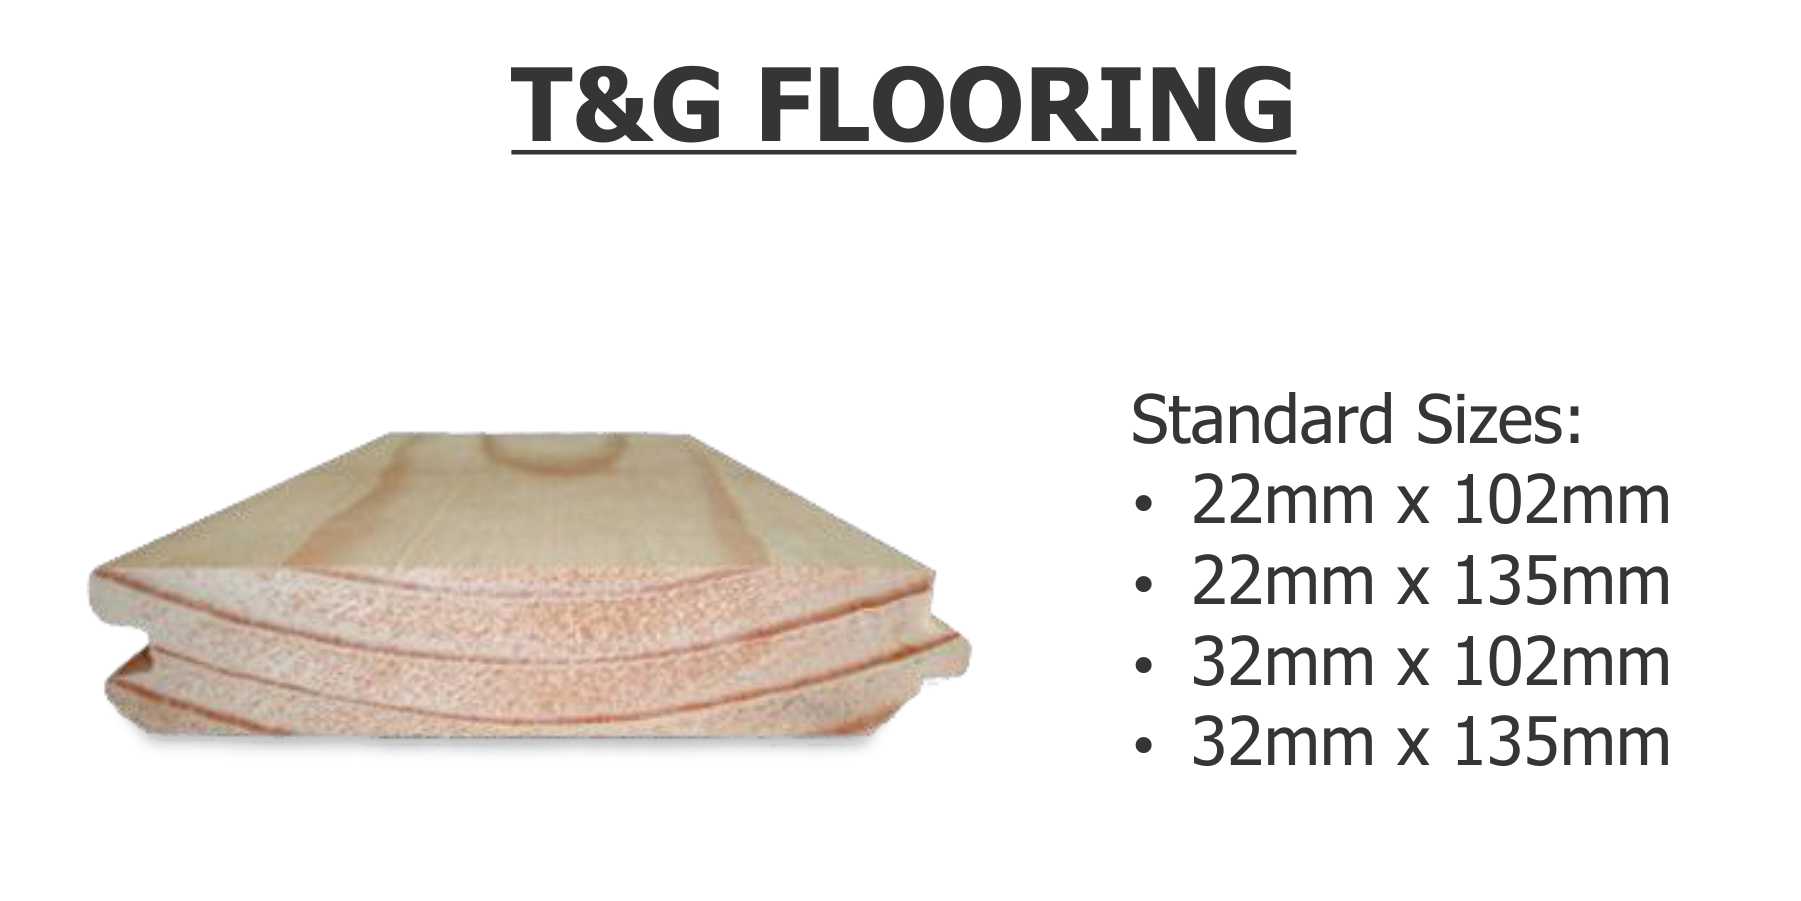 tg flooring